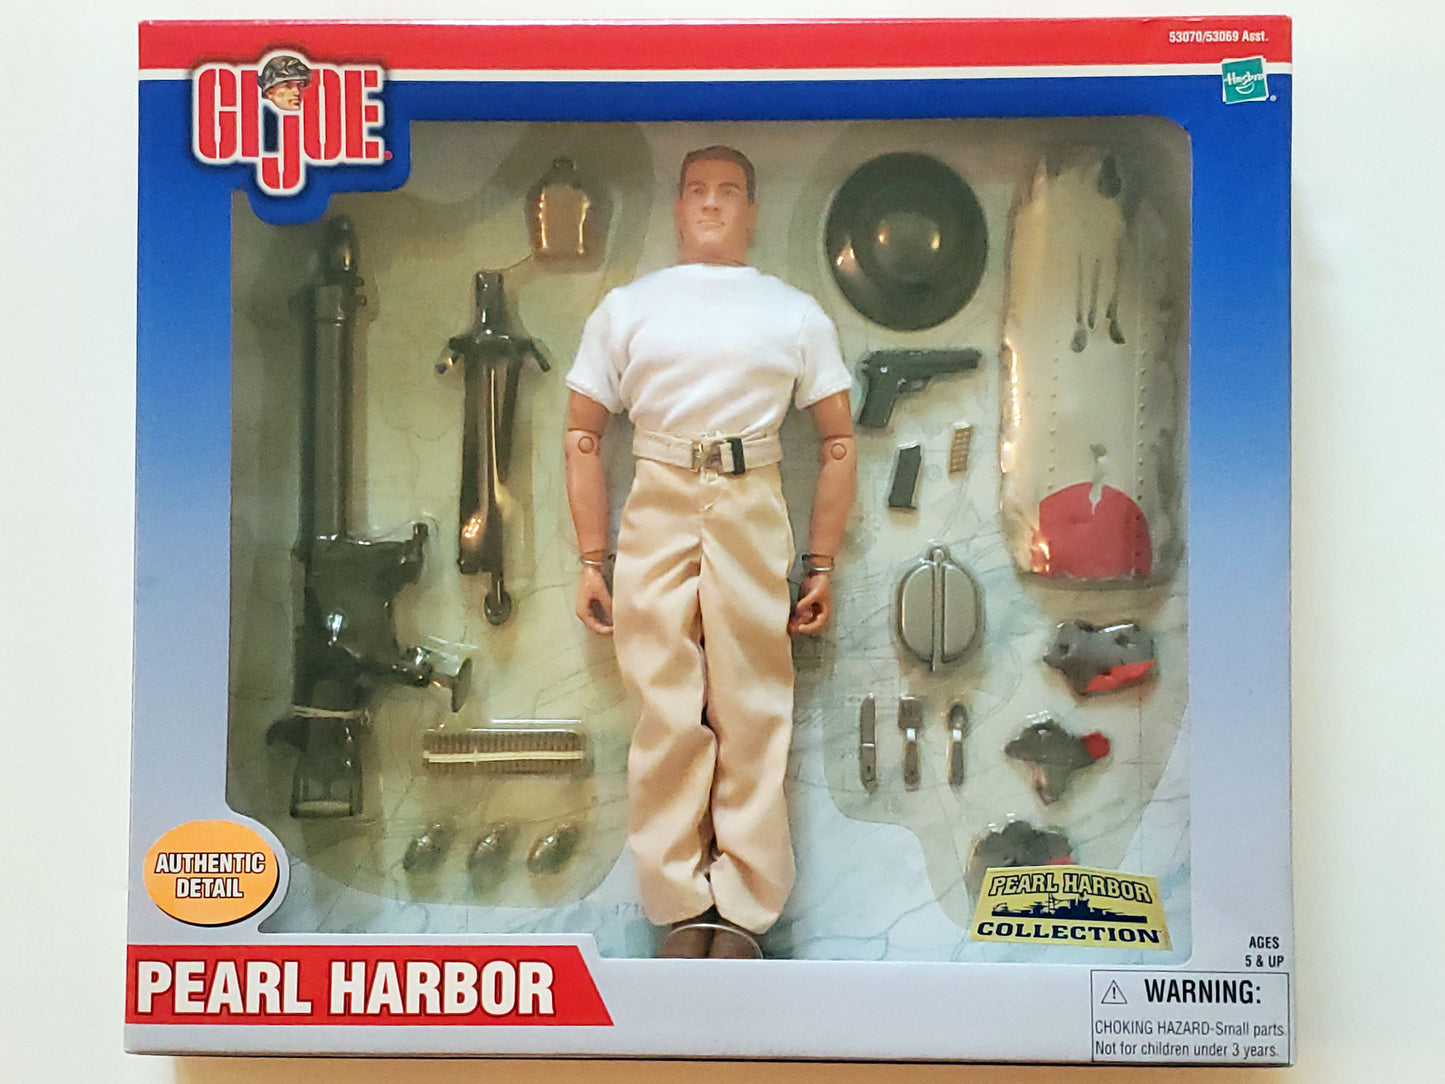 G.I. Joe WWII U.S. Army Soldier Pearl Harbor